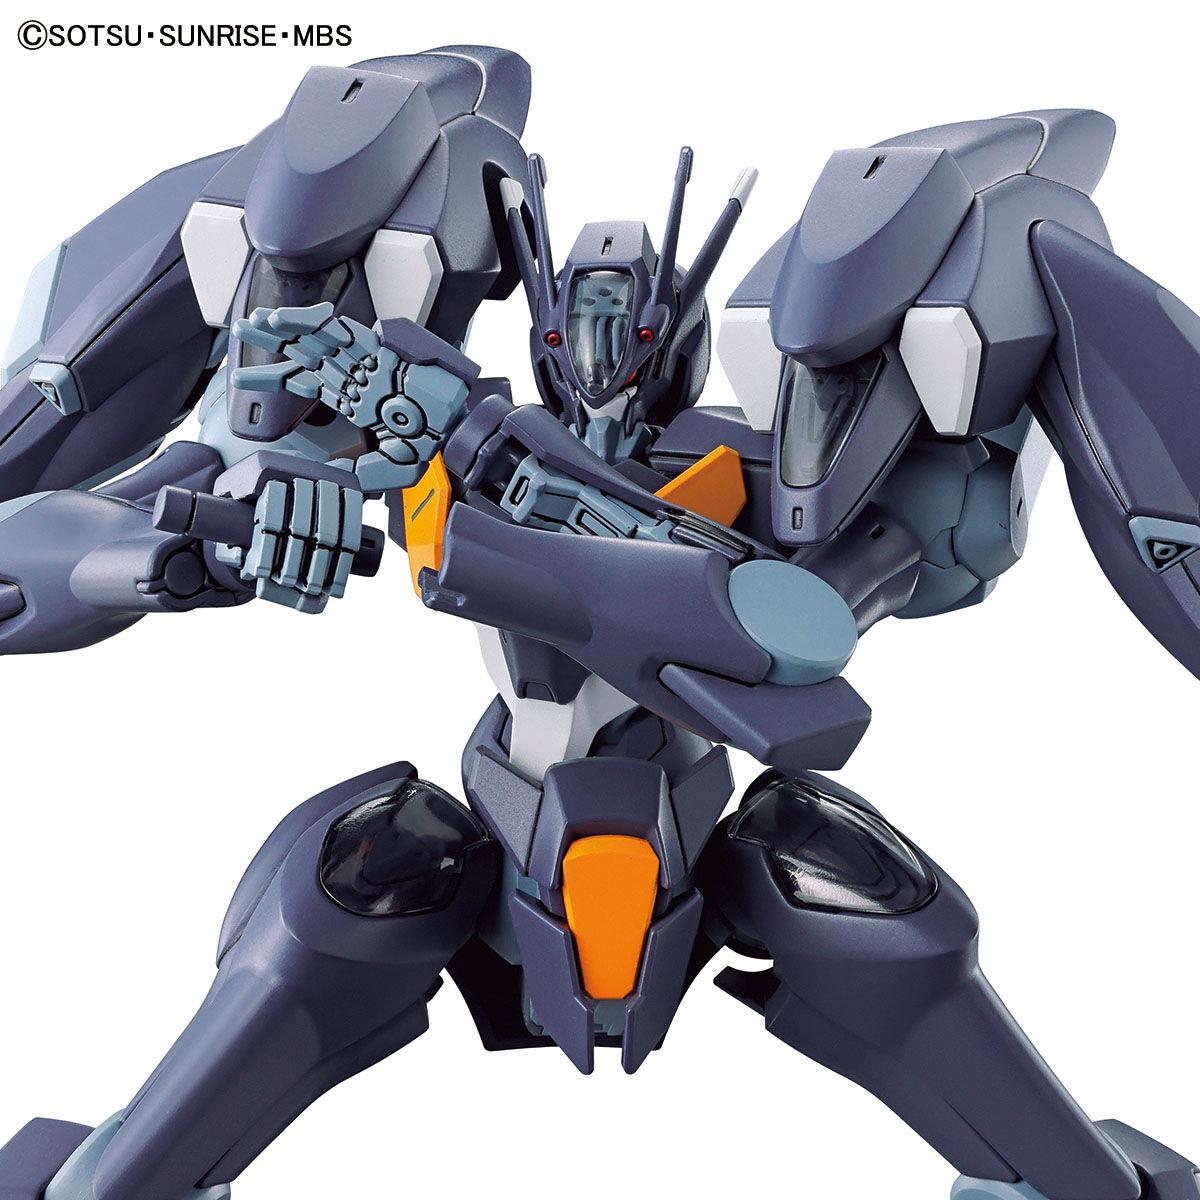 Gundam: Gundam Pharact HG Model